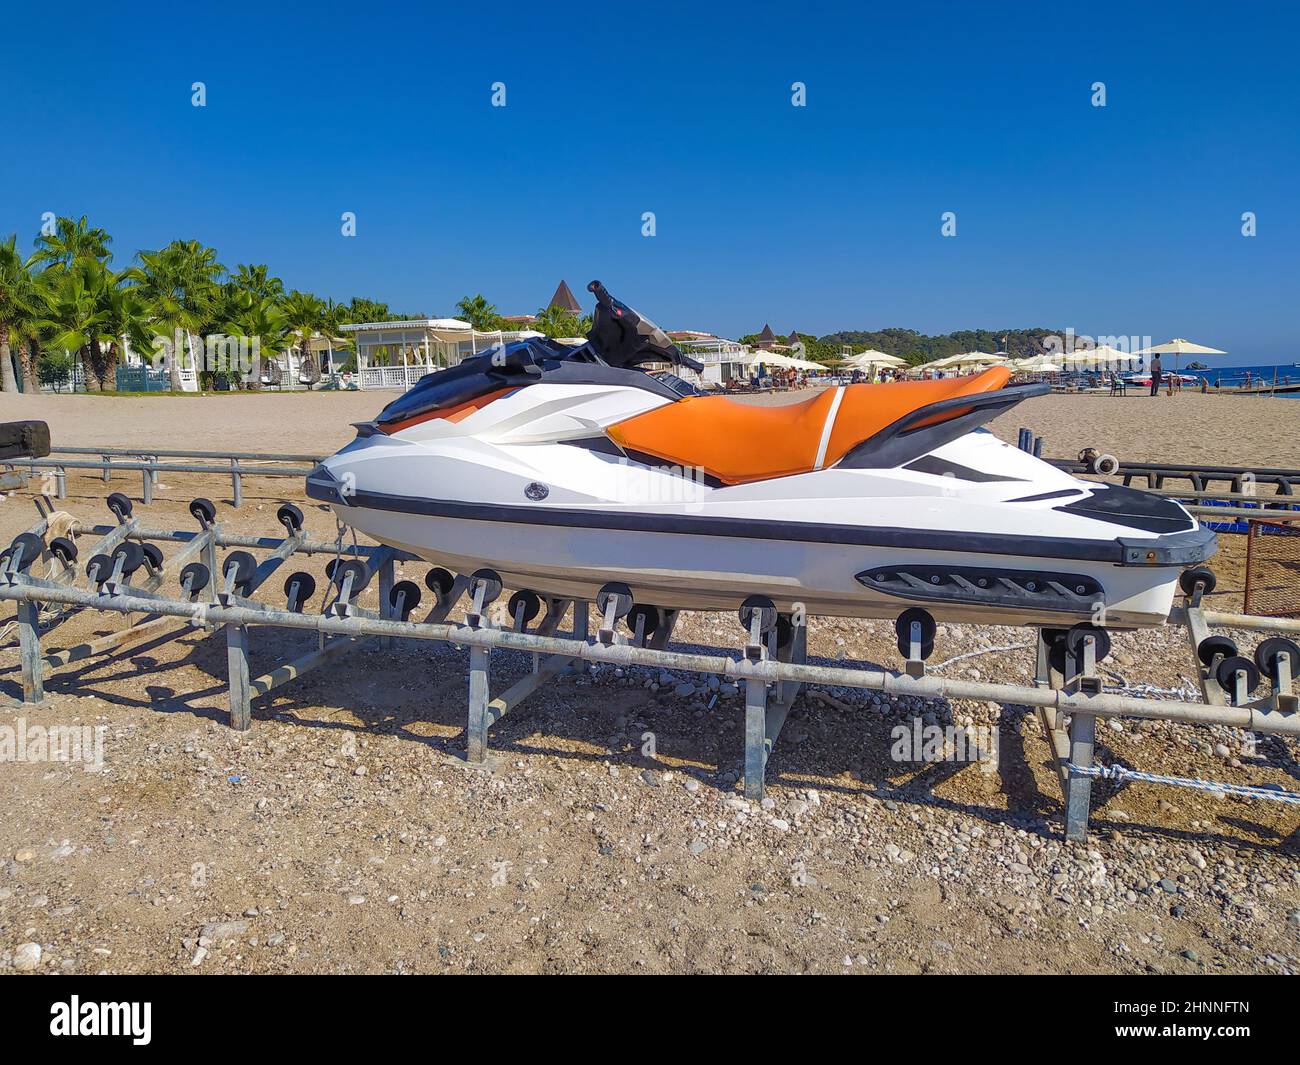 Personal watercraft or jet ski. High performance machine. Stock Photo